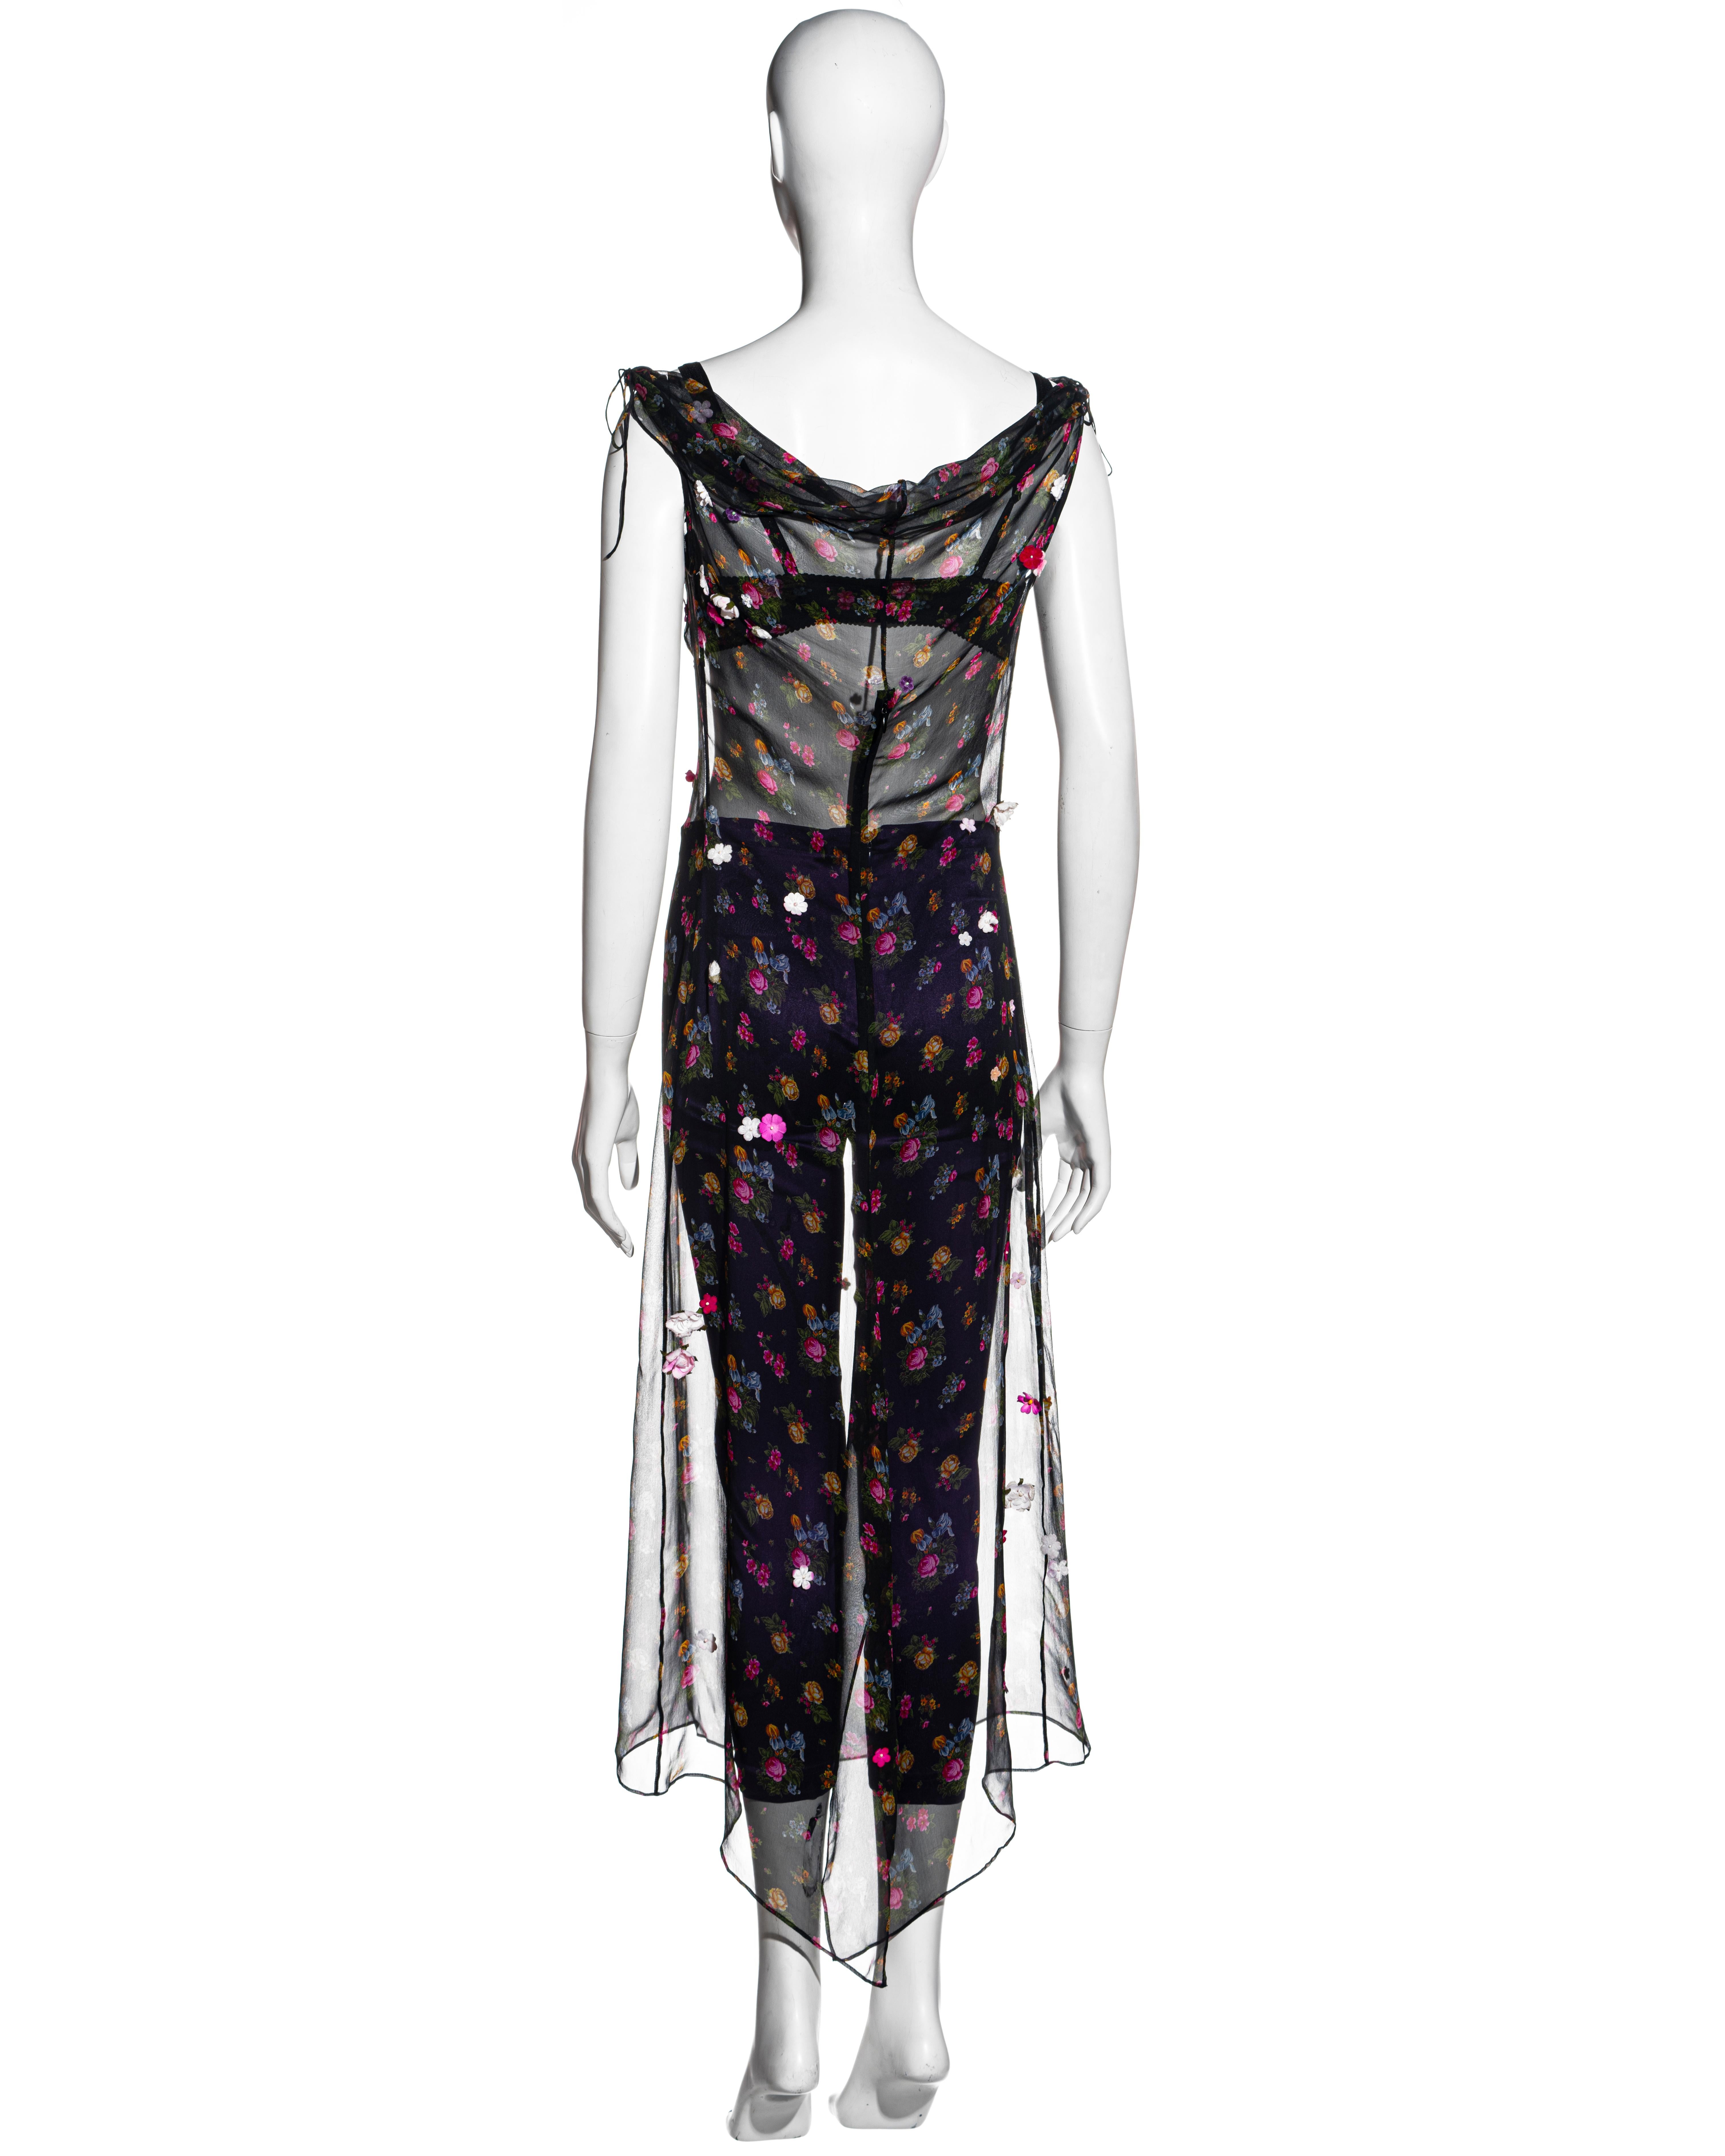 Dolce & Gabbana floral silk dress, bra and leggings ensemble, fw 1999 3